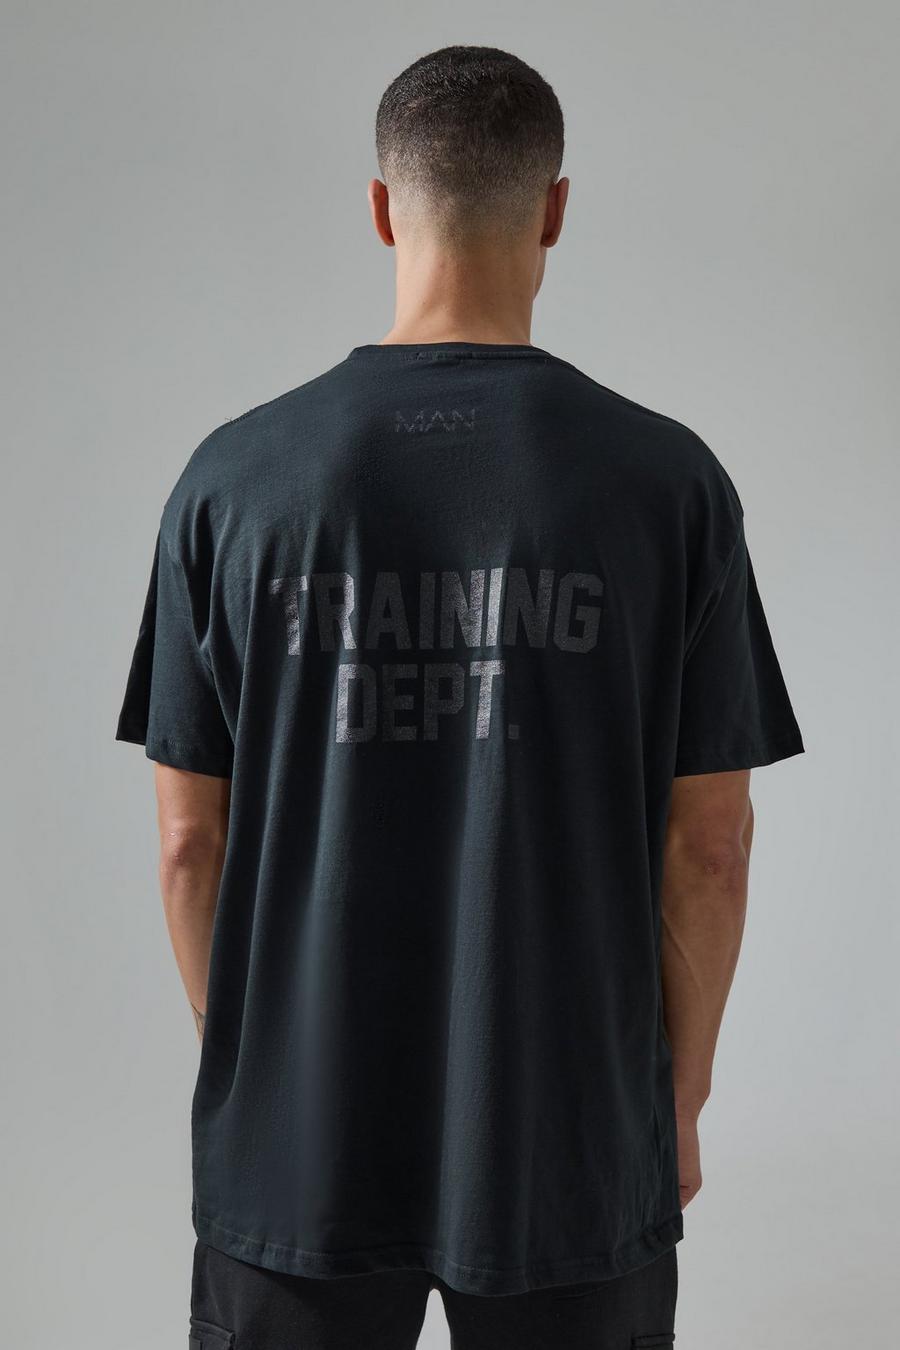 Camiseta oversize Active Training Dept, Black